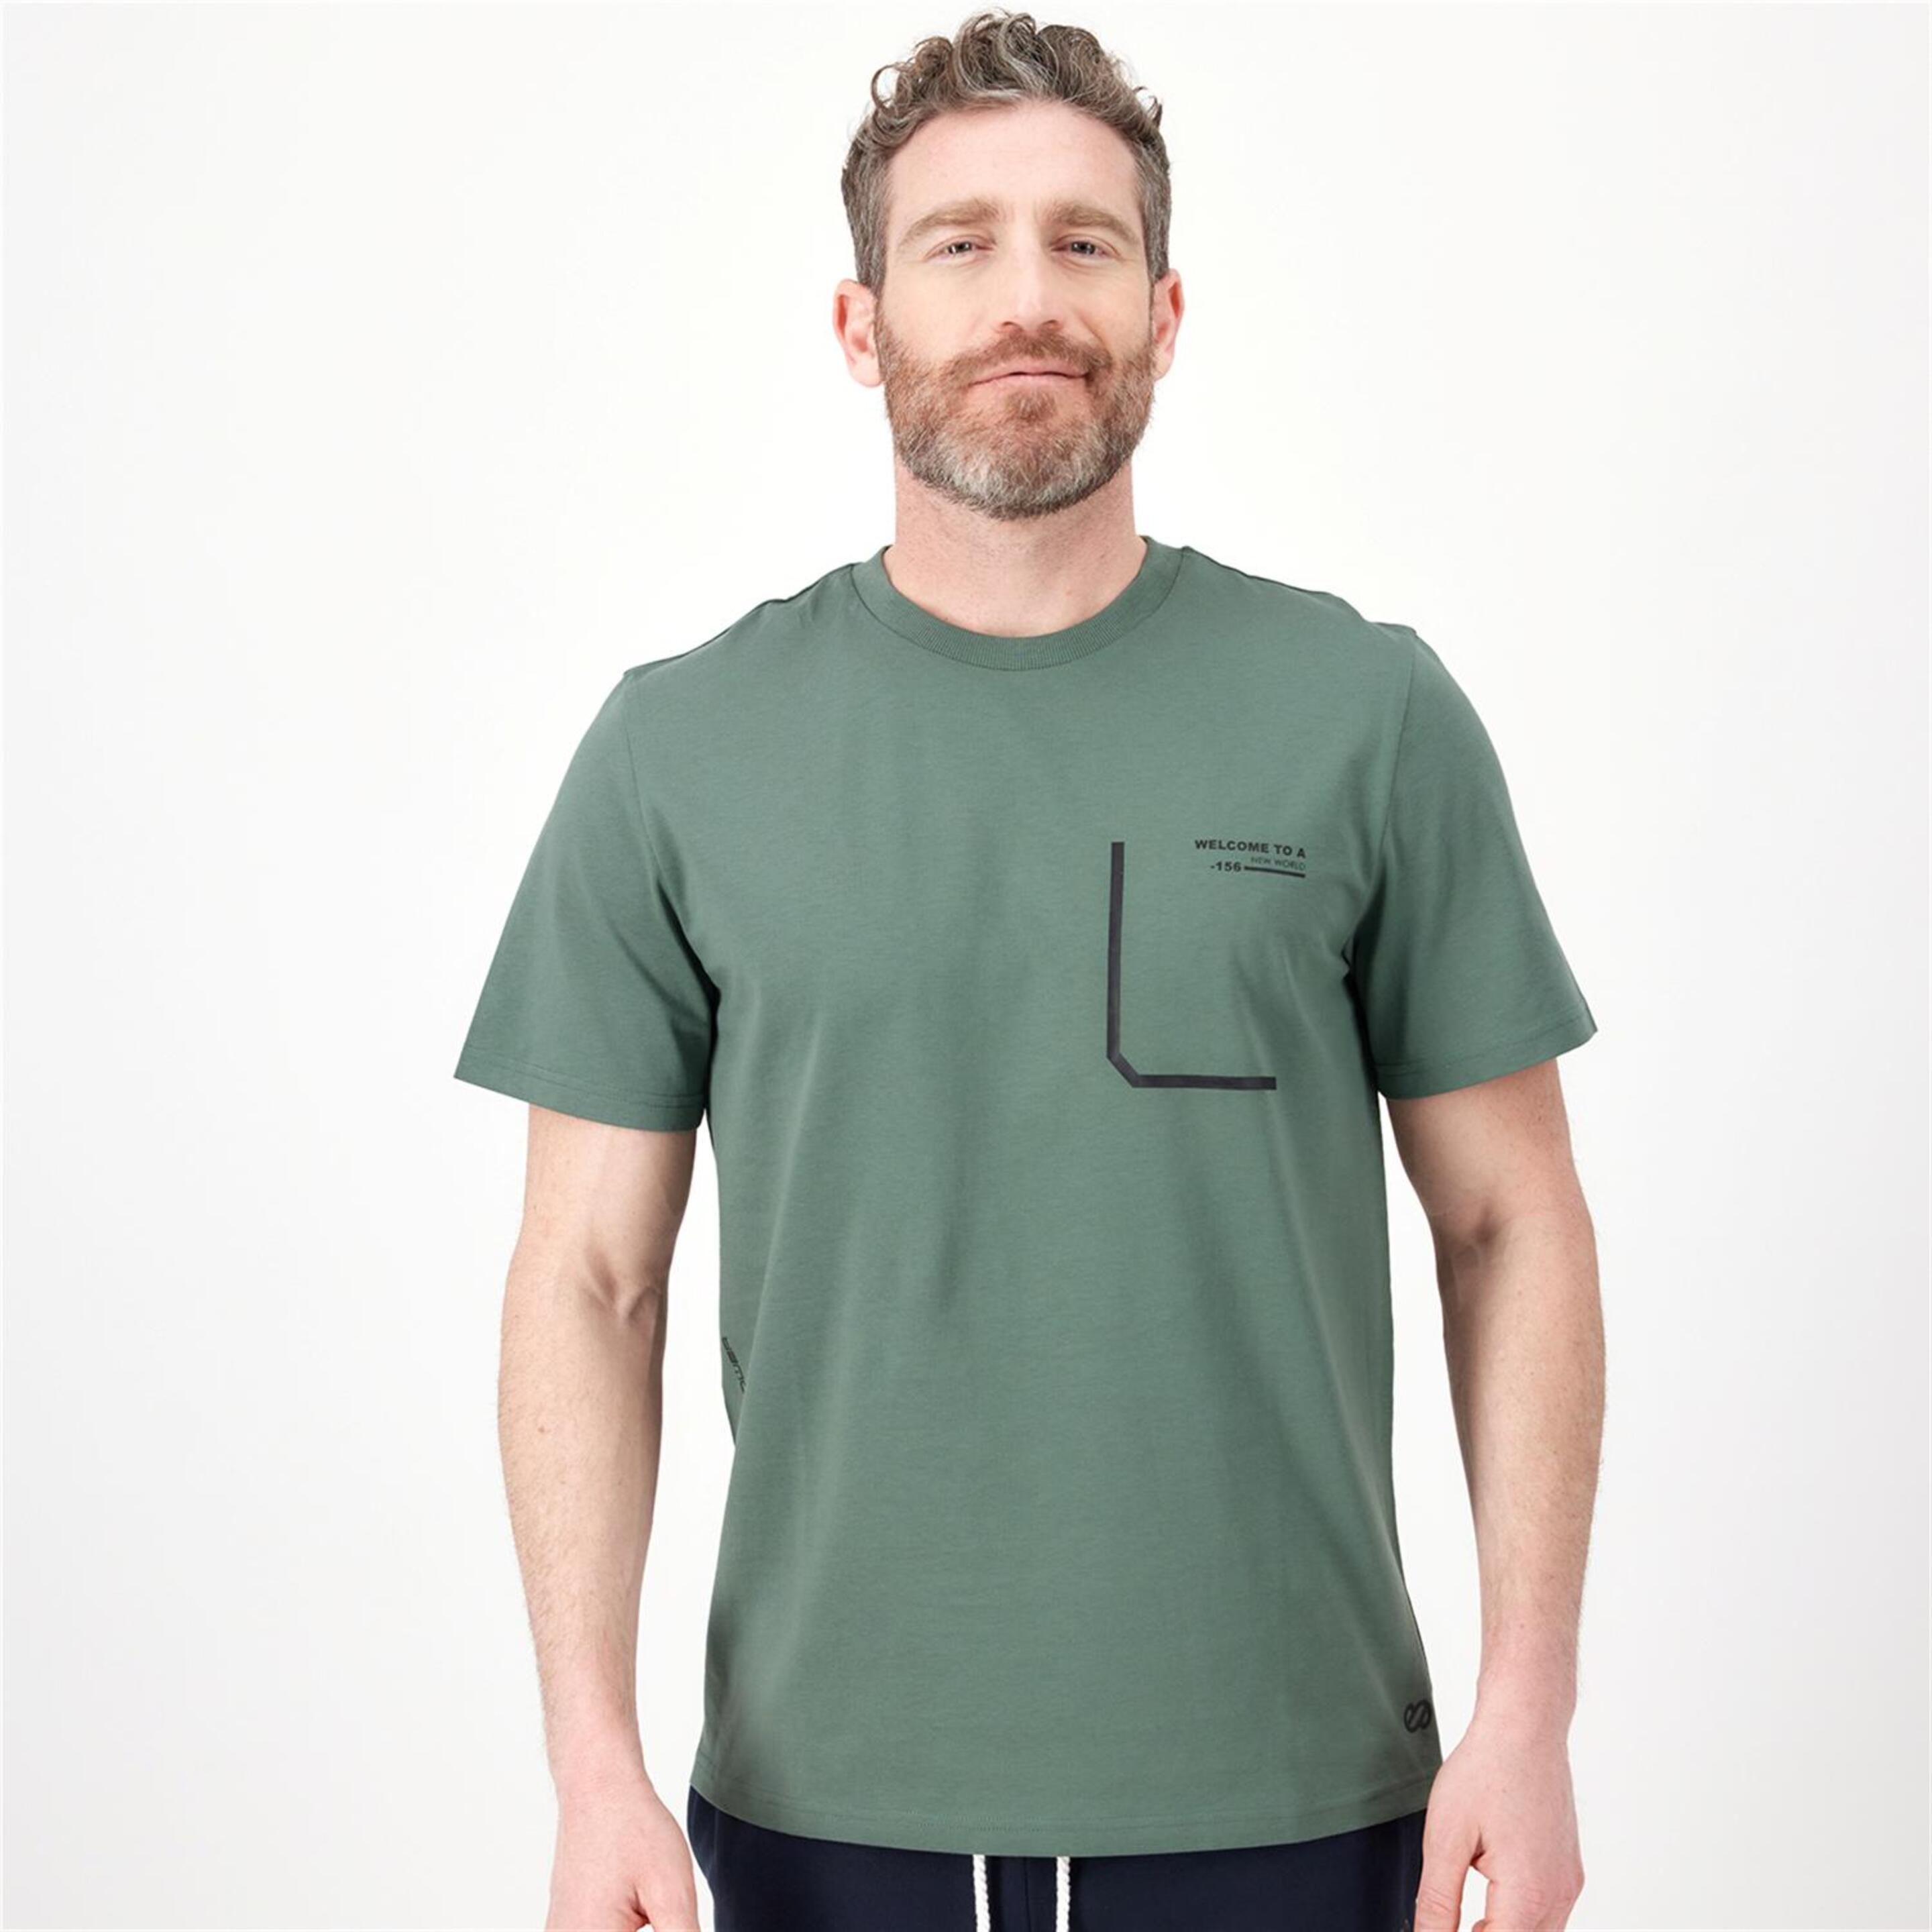 Silver Unlimited - verde - Camiseta Hombre